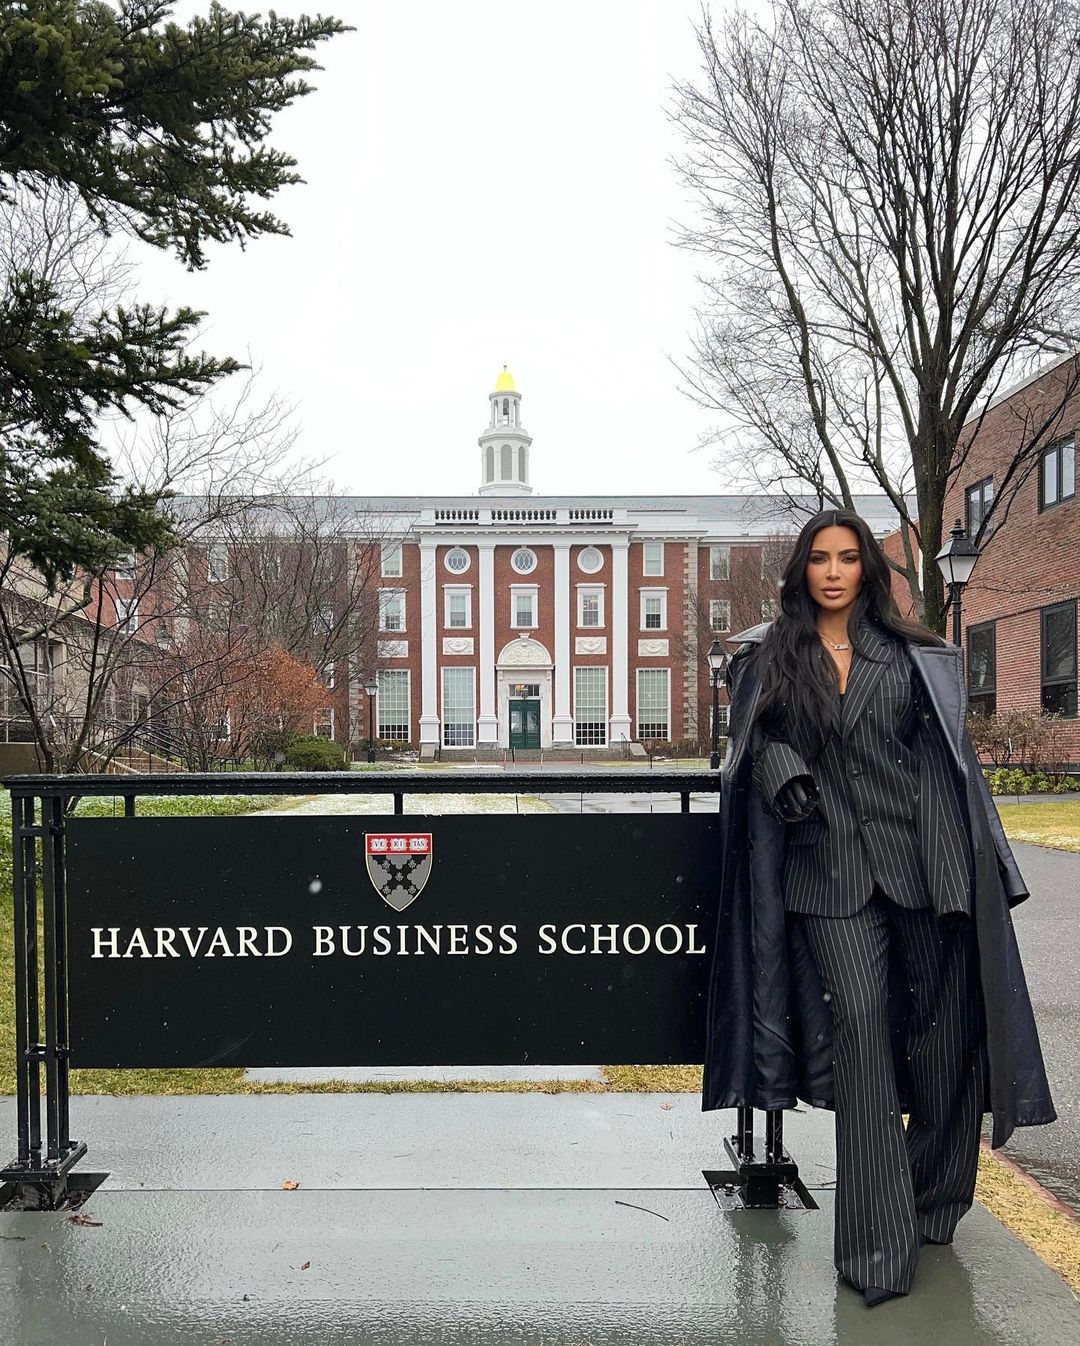 Kim Kardashian 在哈佛商学院演讲